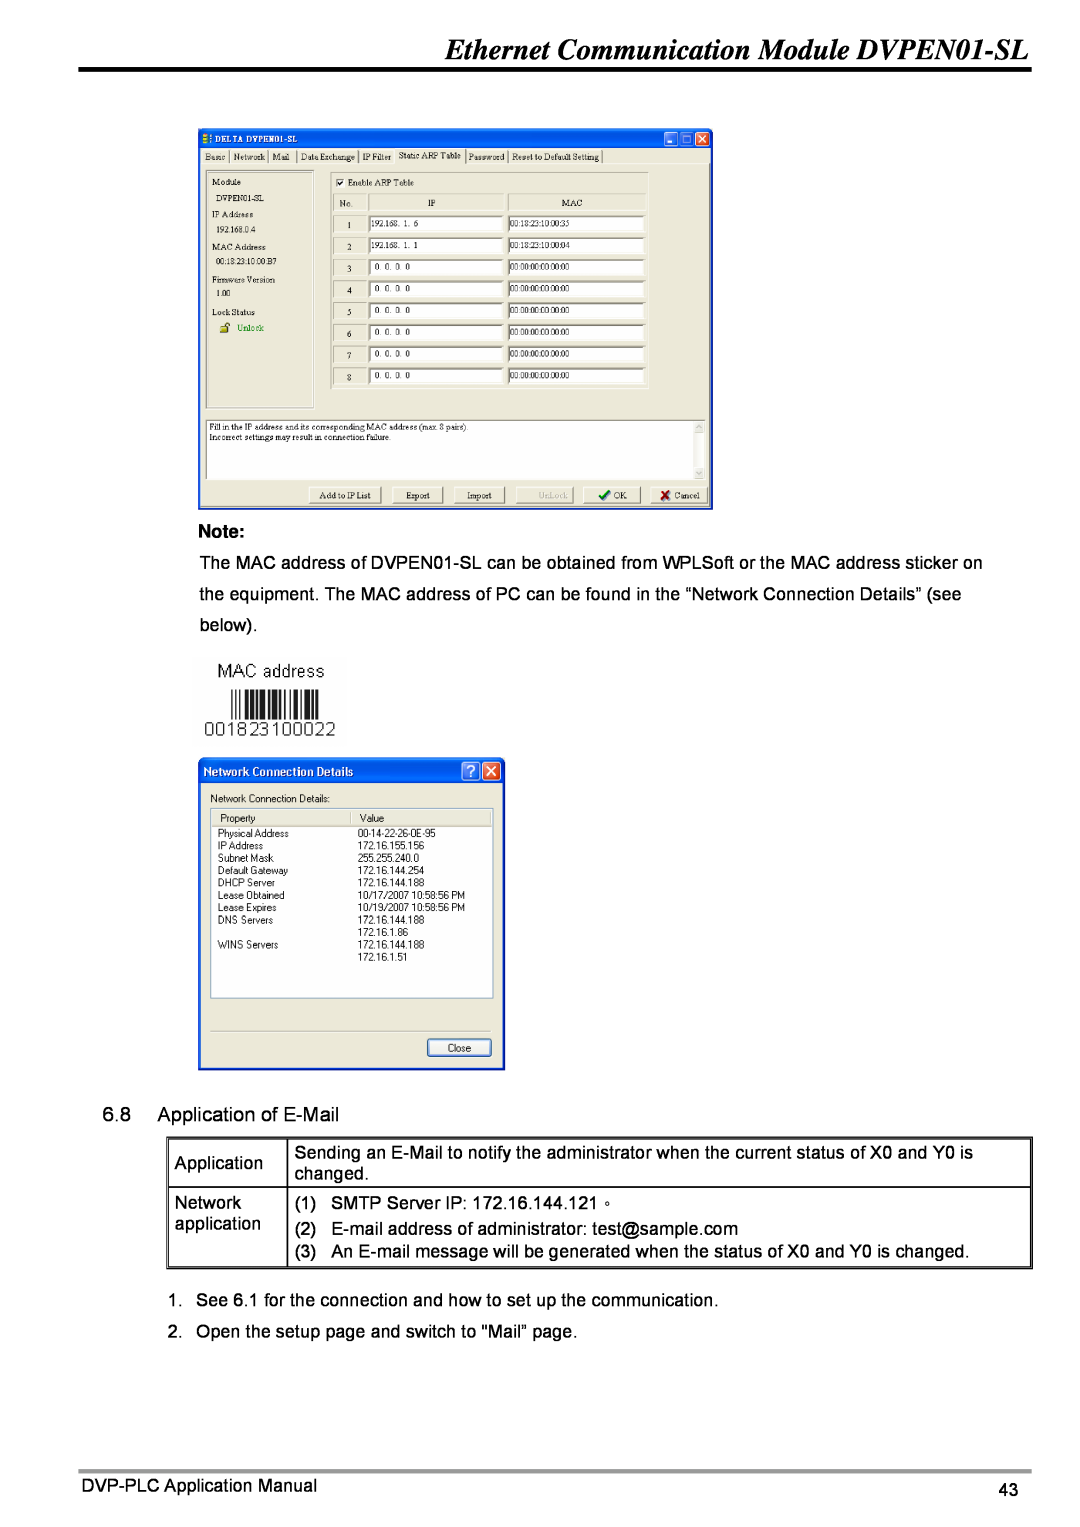 Delta Electronics manual Ethernet Communication Module DVPEN01-SL, Application of E-Mail 